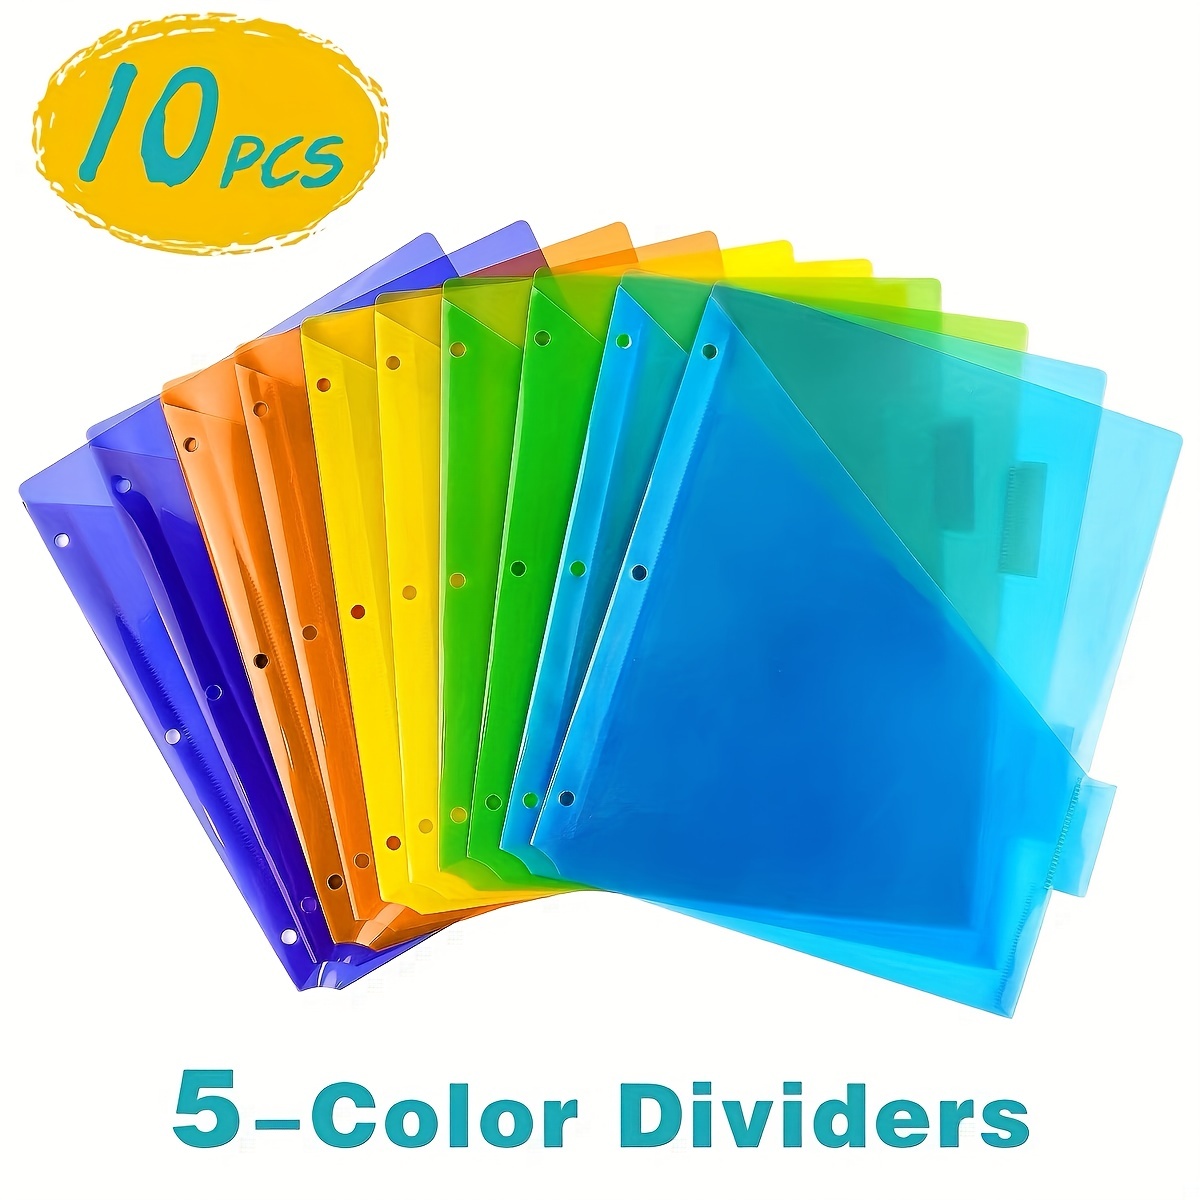 1 Inch Binder, 4 Pack - Multicolor